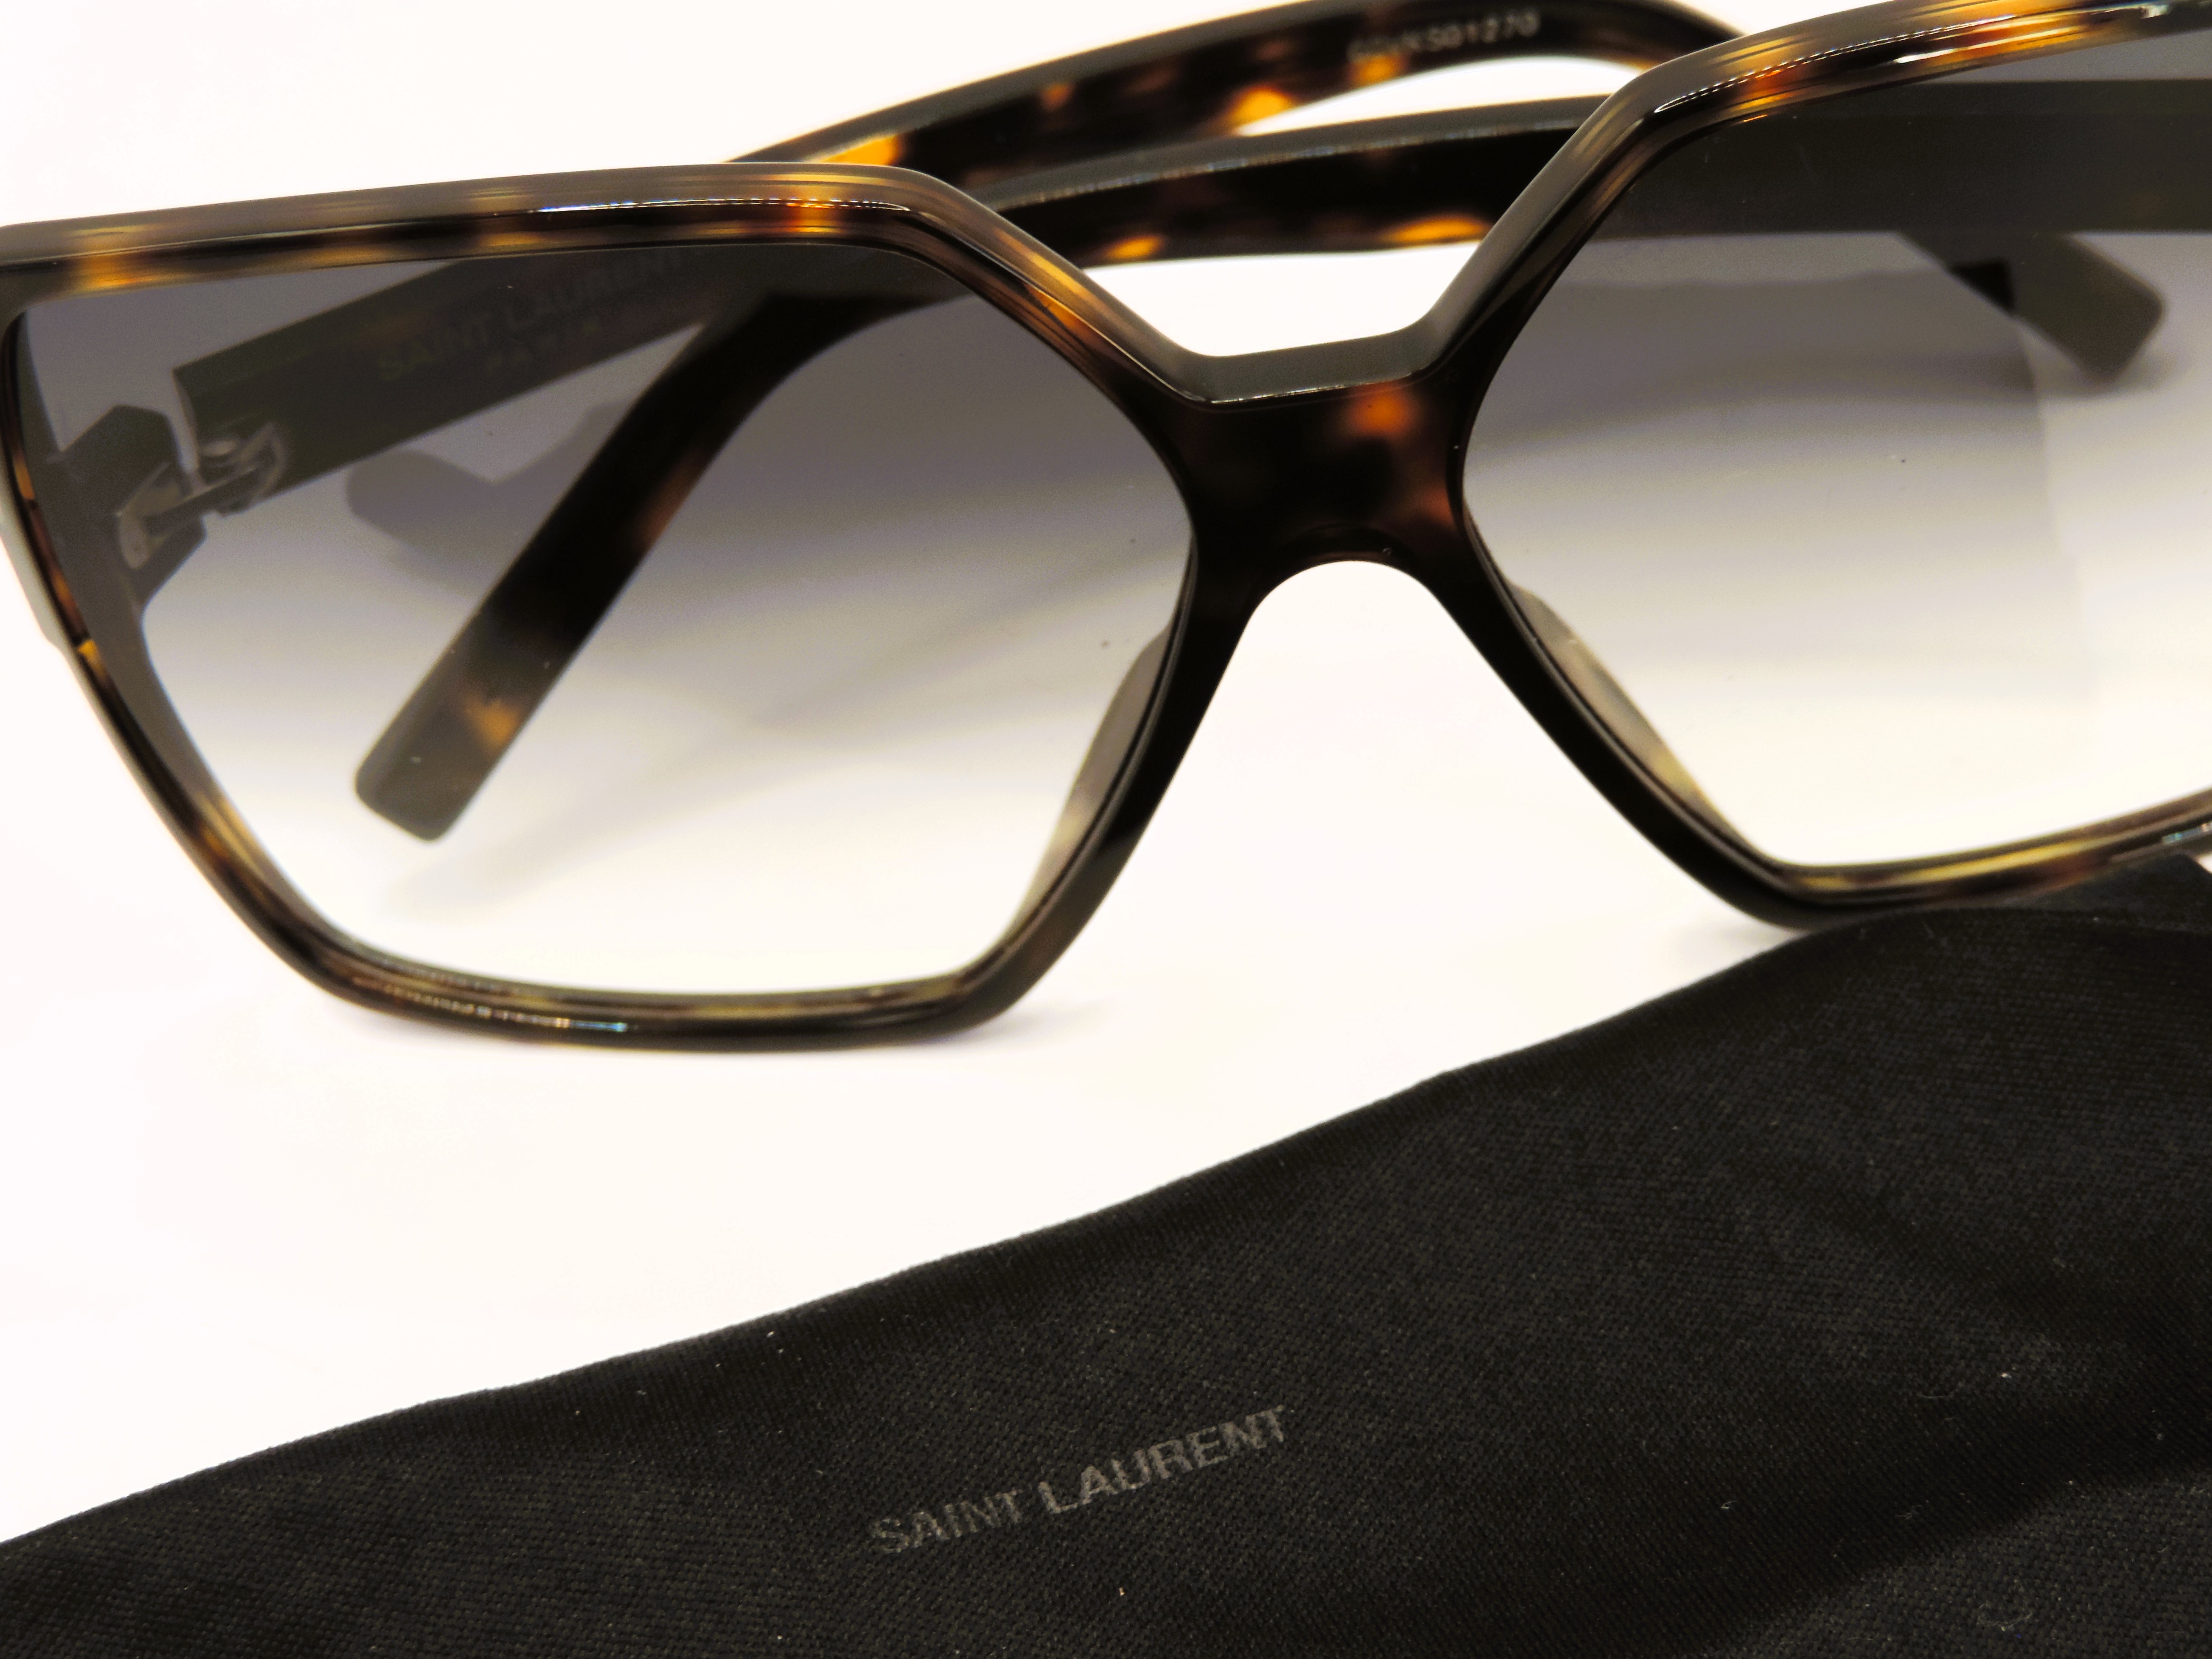 Saint Laurent Paris 'BETTY' SL232 Havanah Framed Sunglasses New With Case - Image 7 of 9